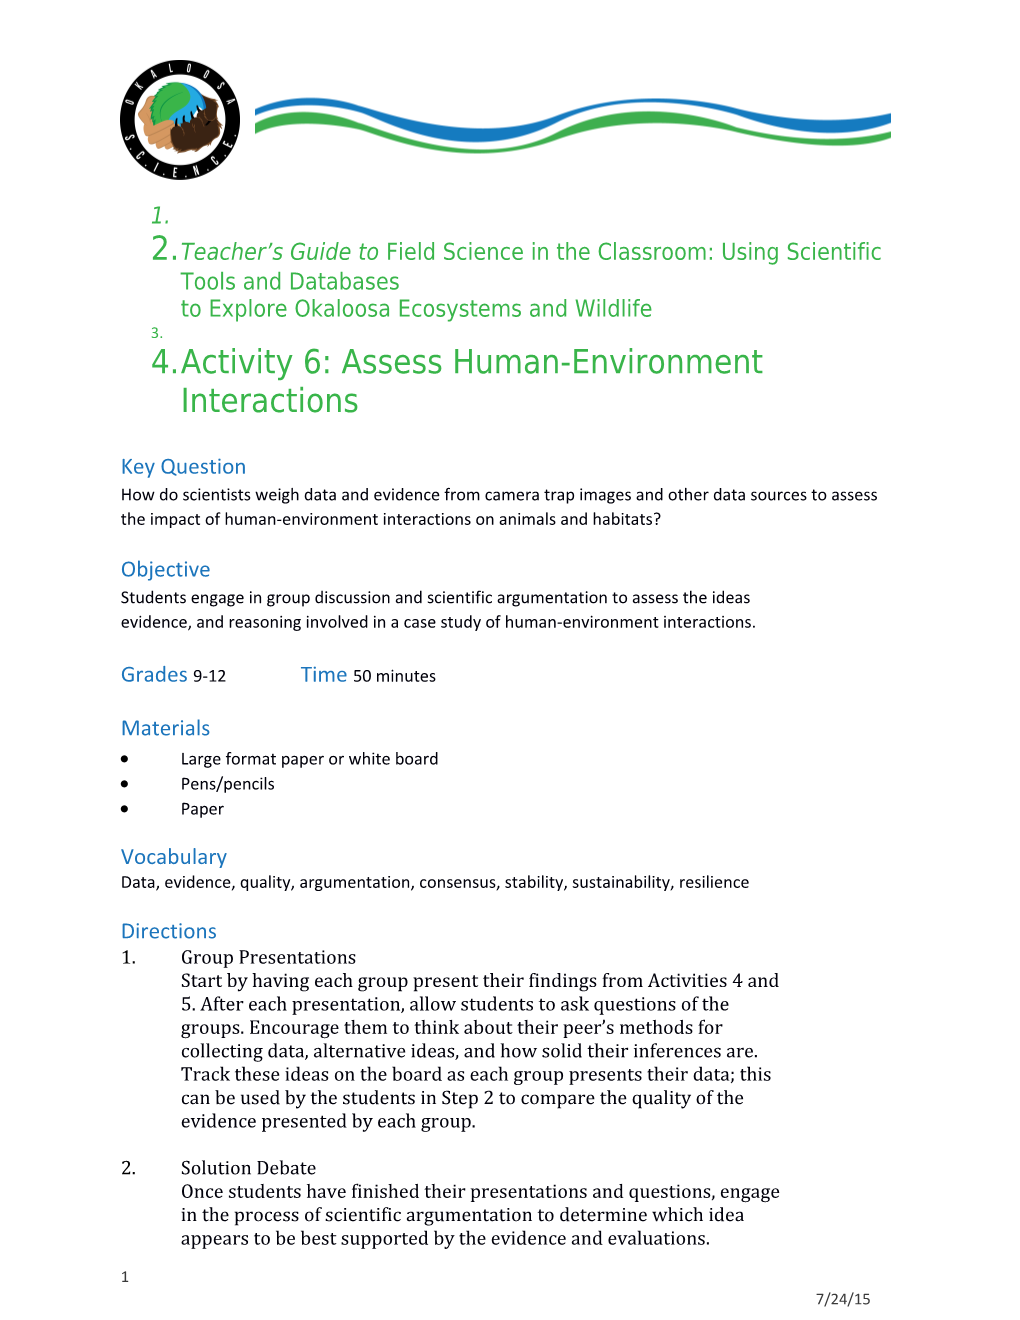 Activity 6: Assess Human-Environment Interactions